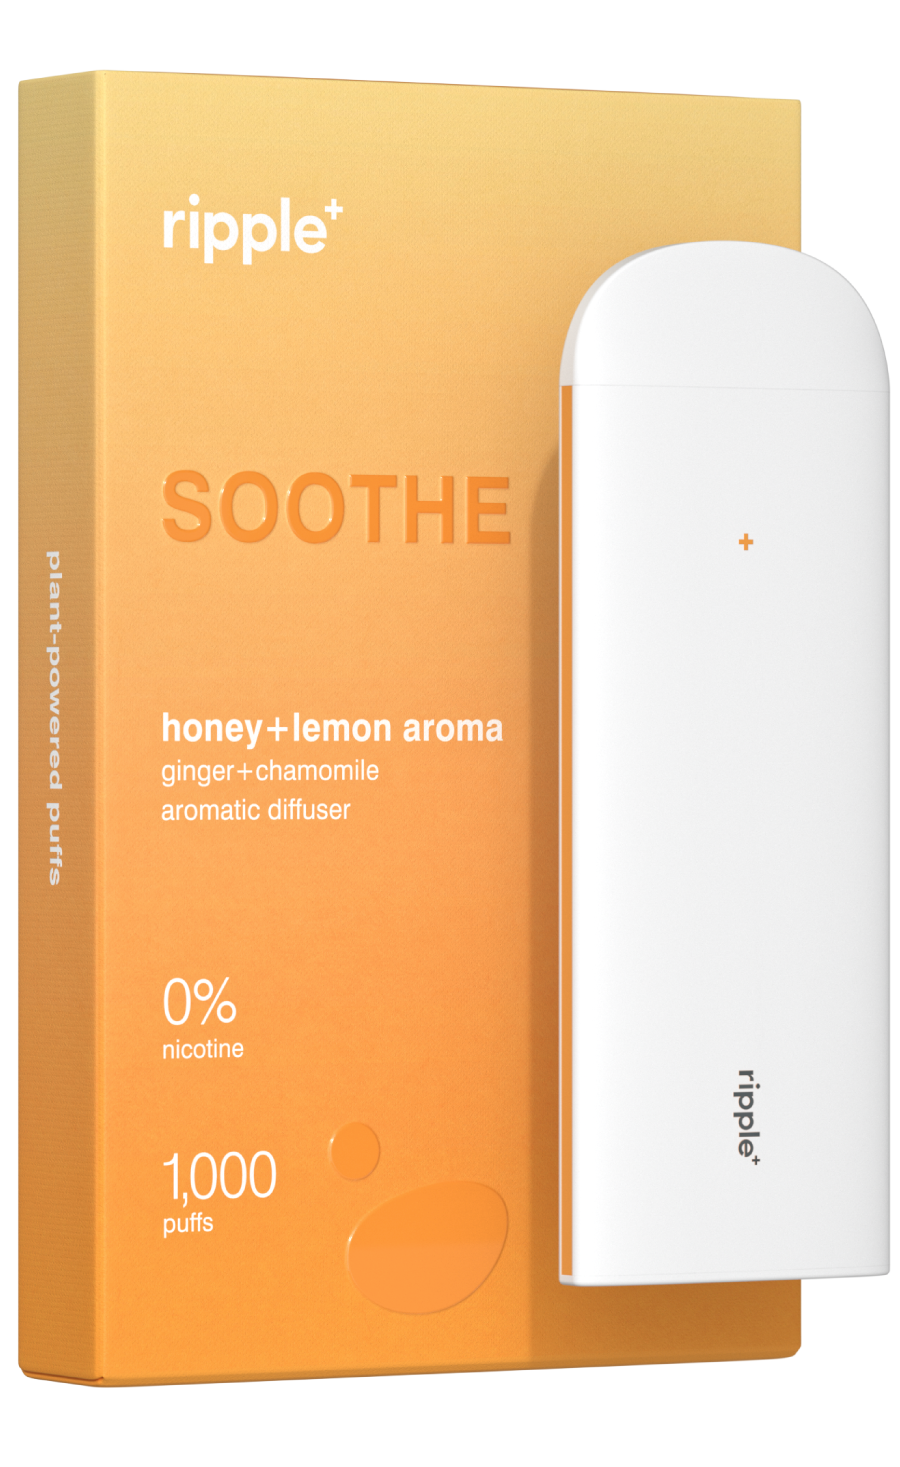 ripple⁺ SOOTHE aromatic diffuser - honey+lemon aroma